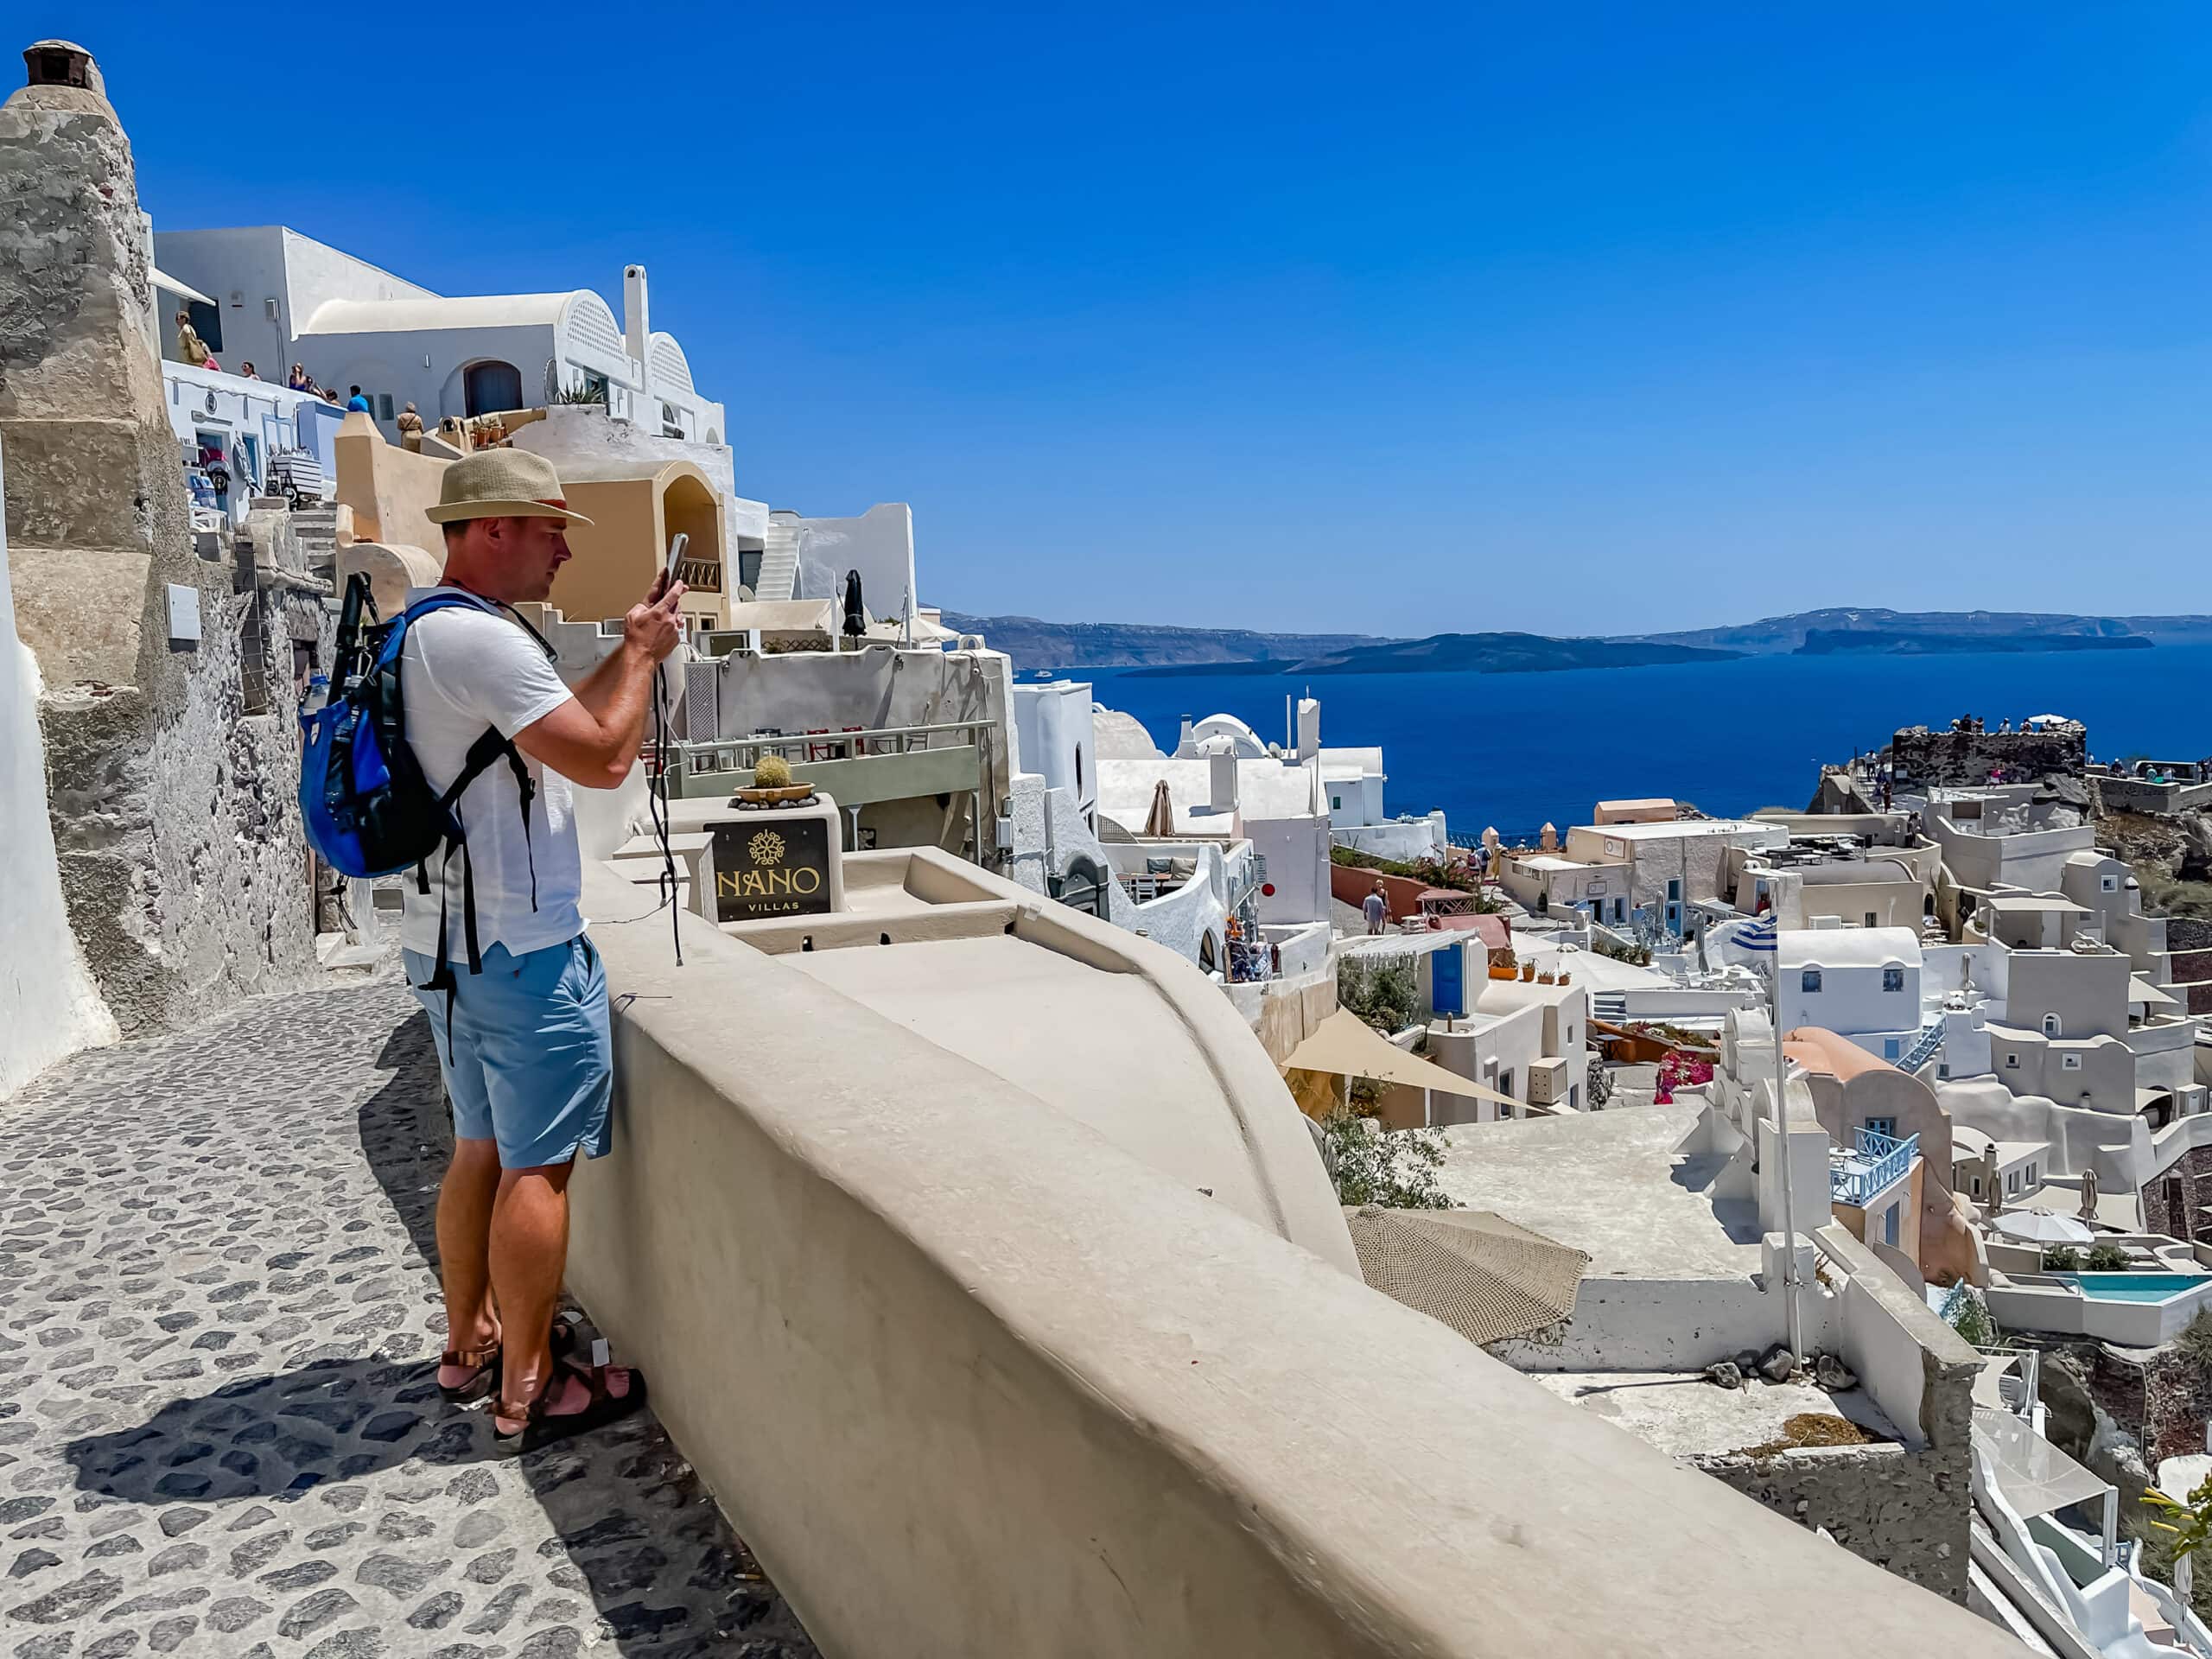 travel tips for greece